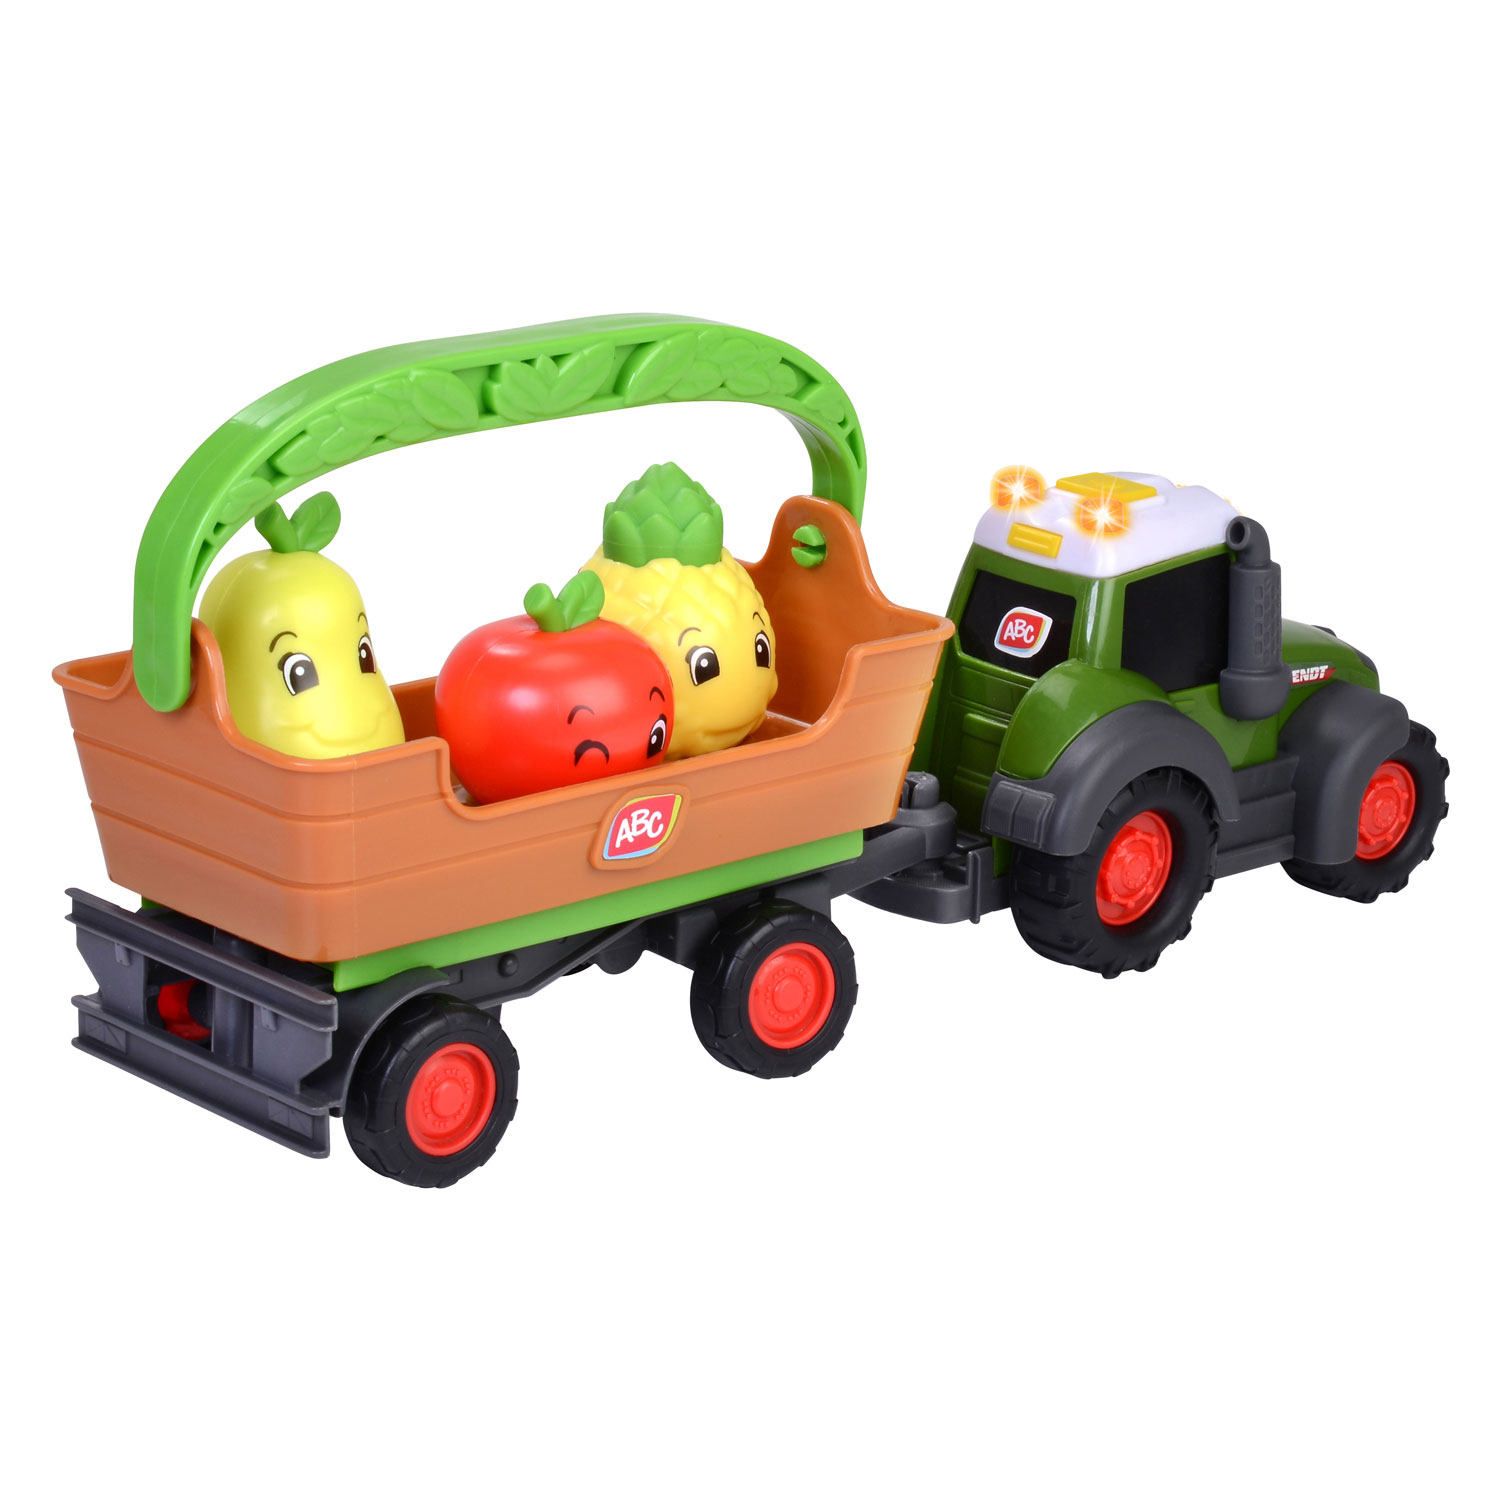 Tracteur de fruits ABC Freddy avec remorque